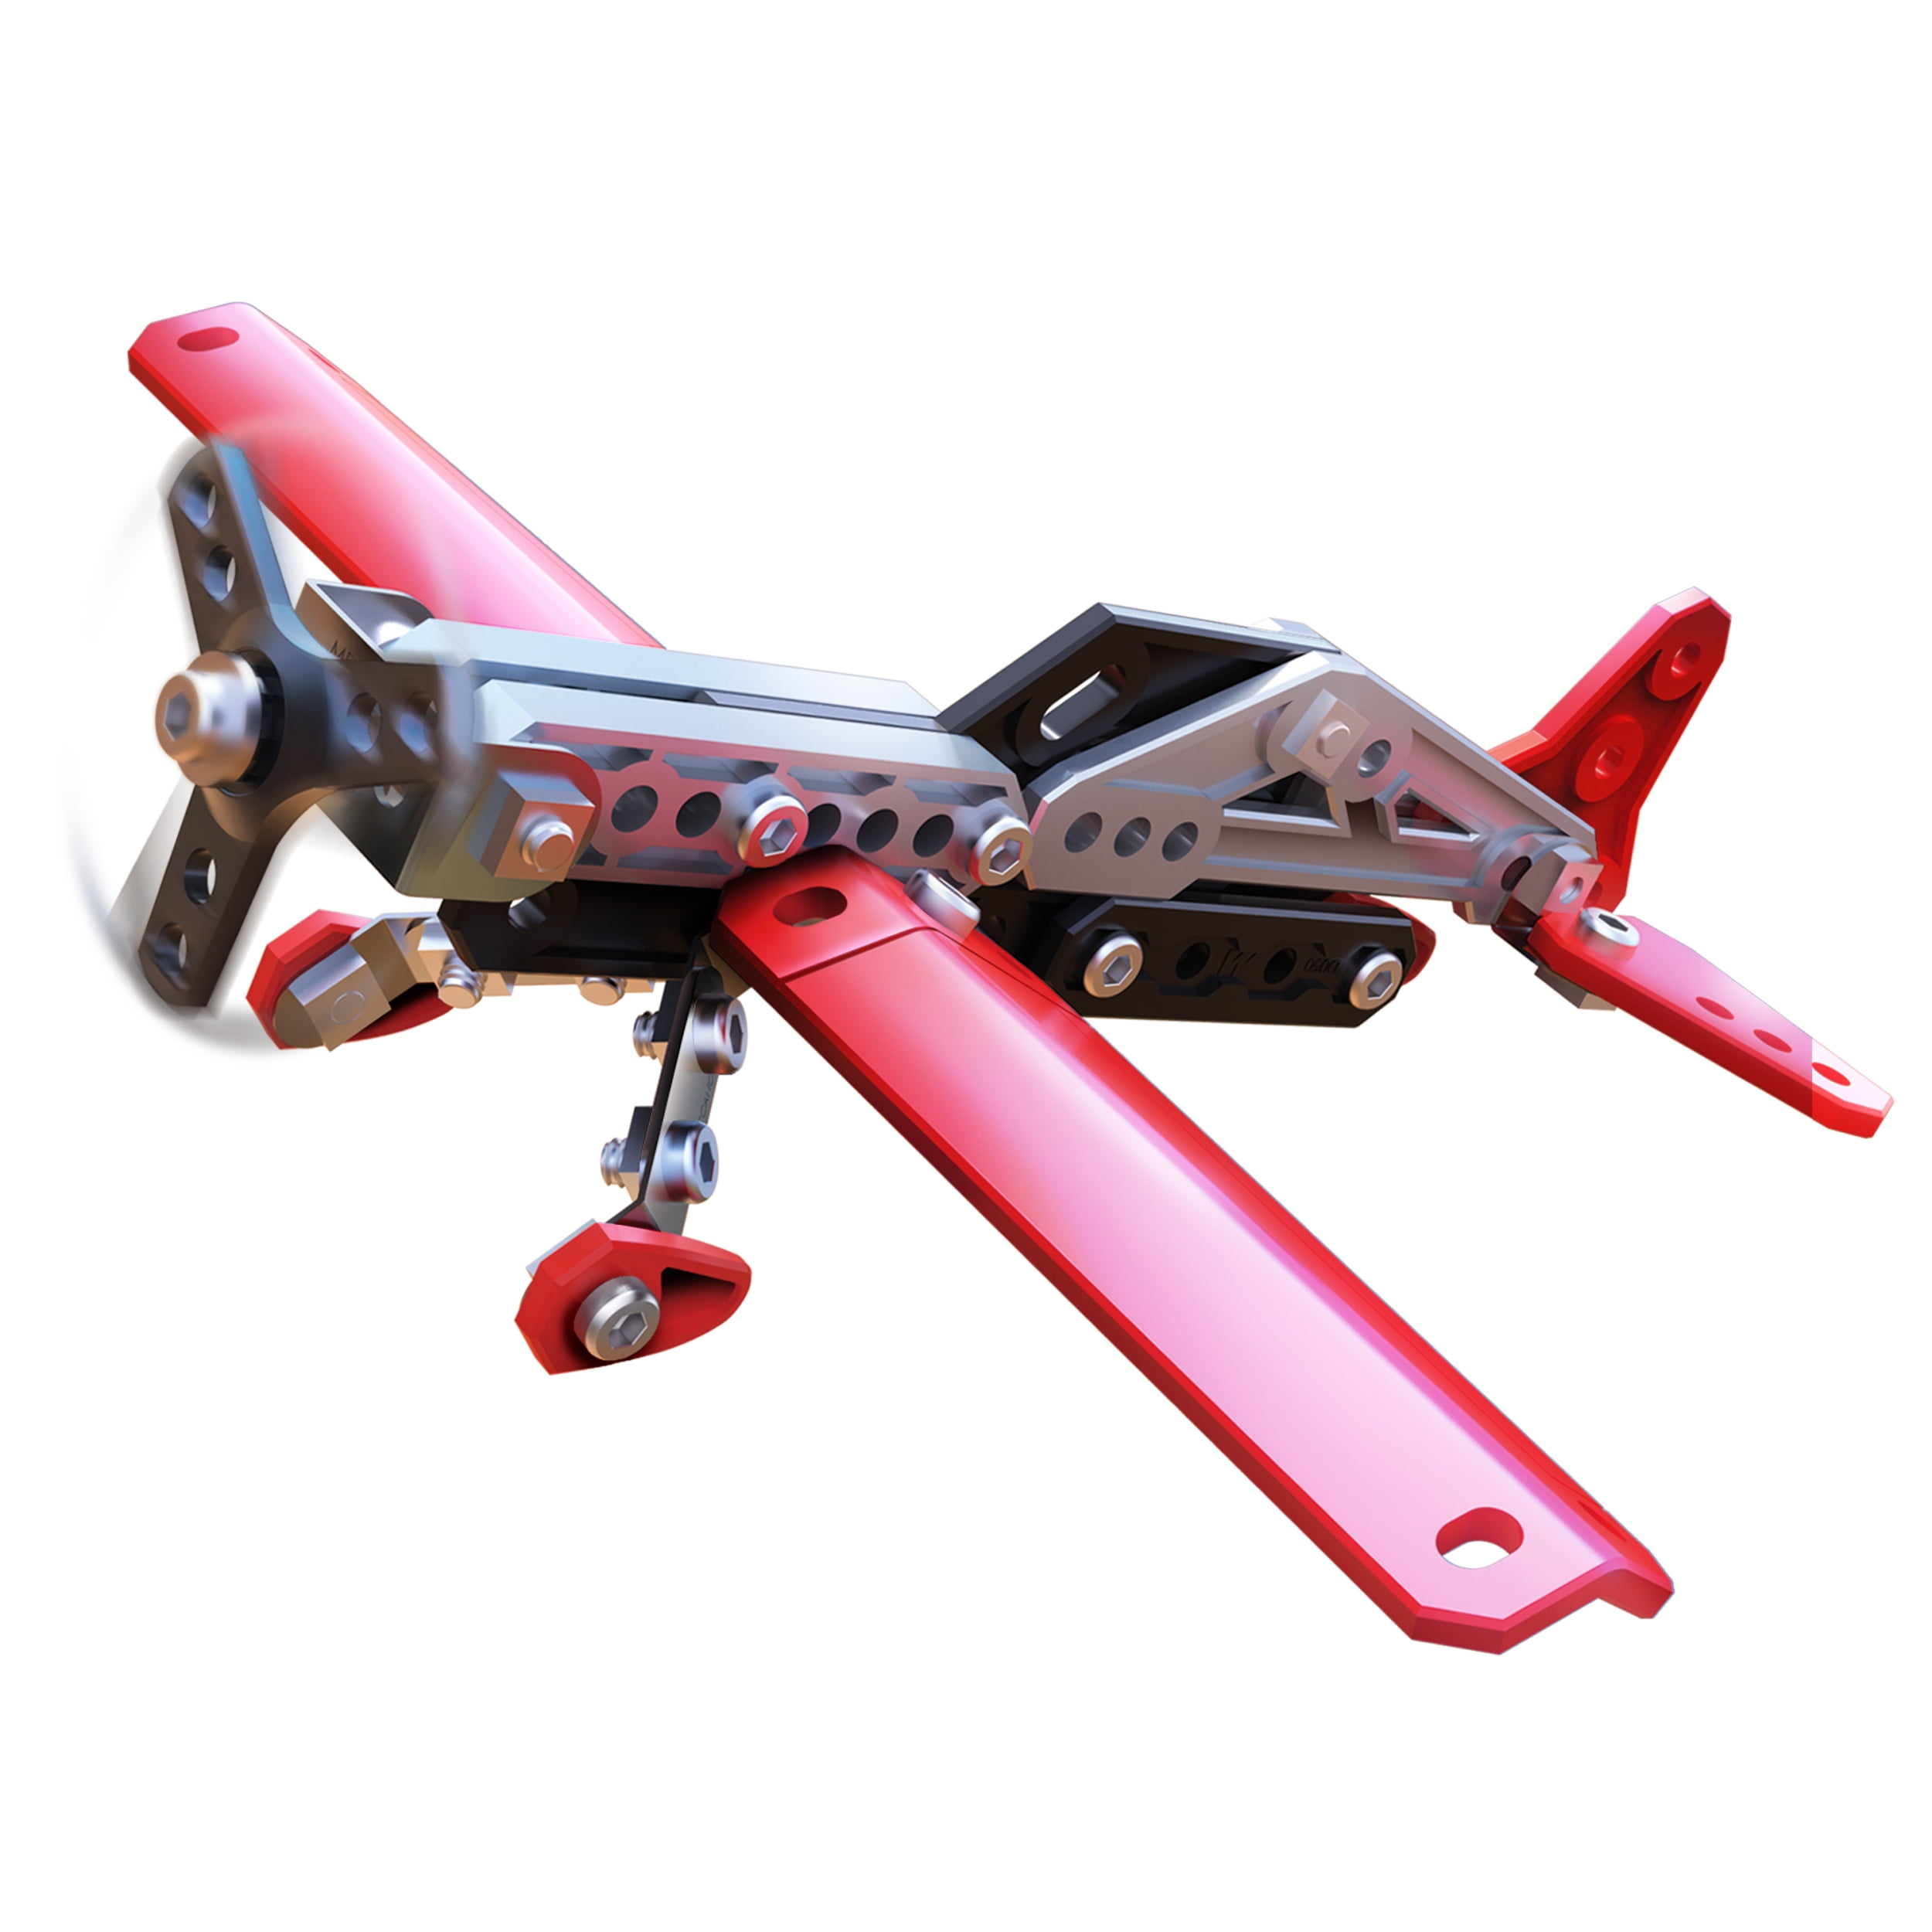 Meccano Maker Systems Stunt Plane Construction Set #17201 